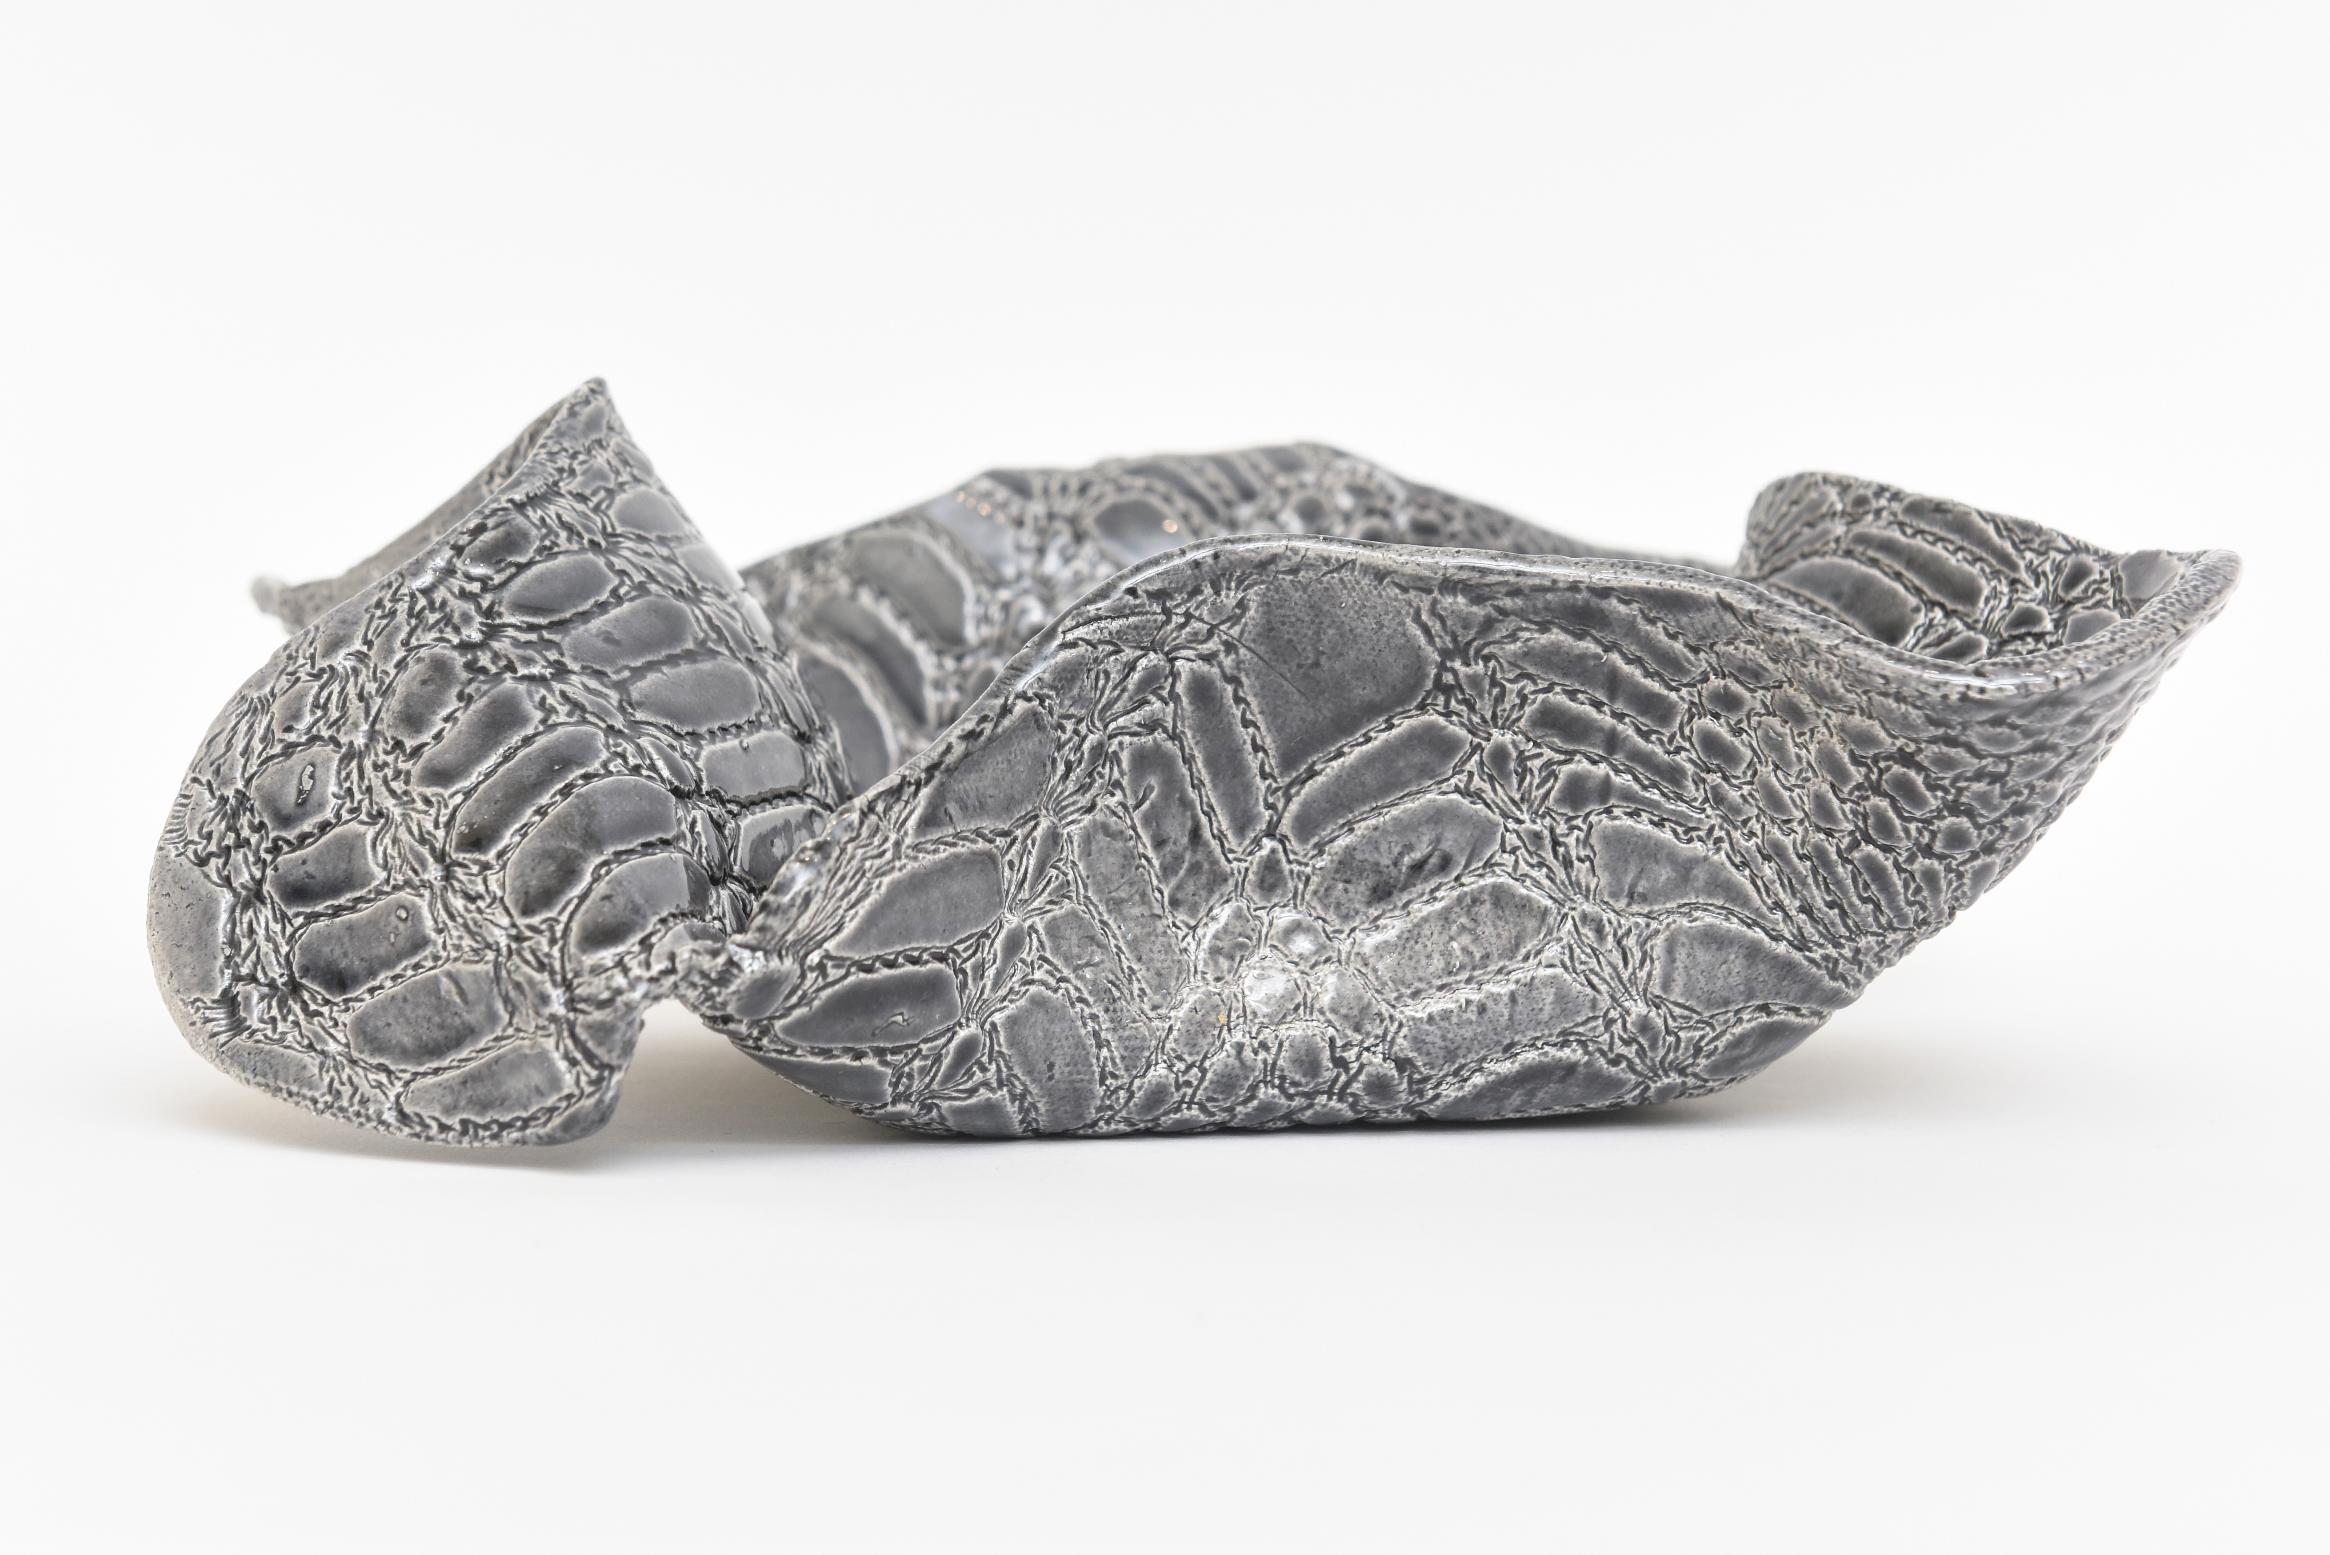 Ceramic Textural Snakeskin Pattern Grey White Biomorphic Sculptural Bowl For Sale 1